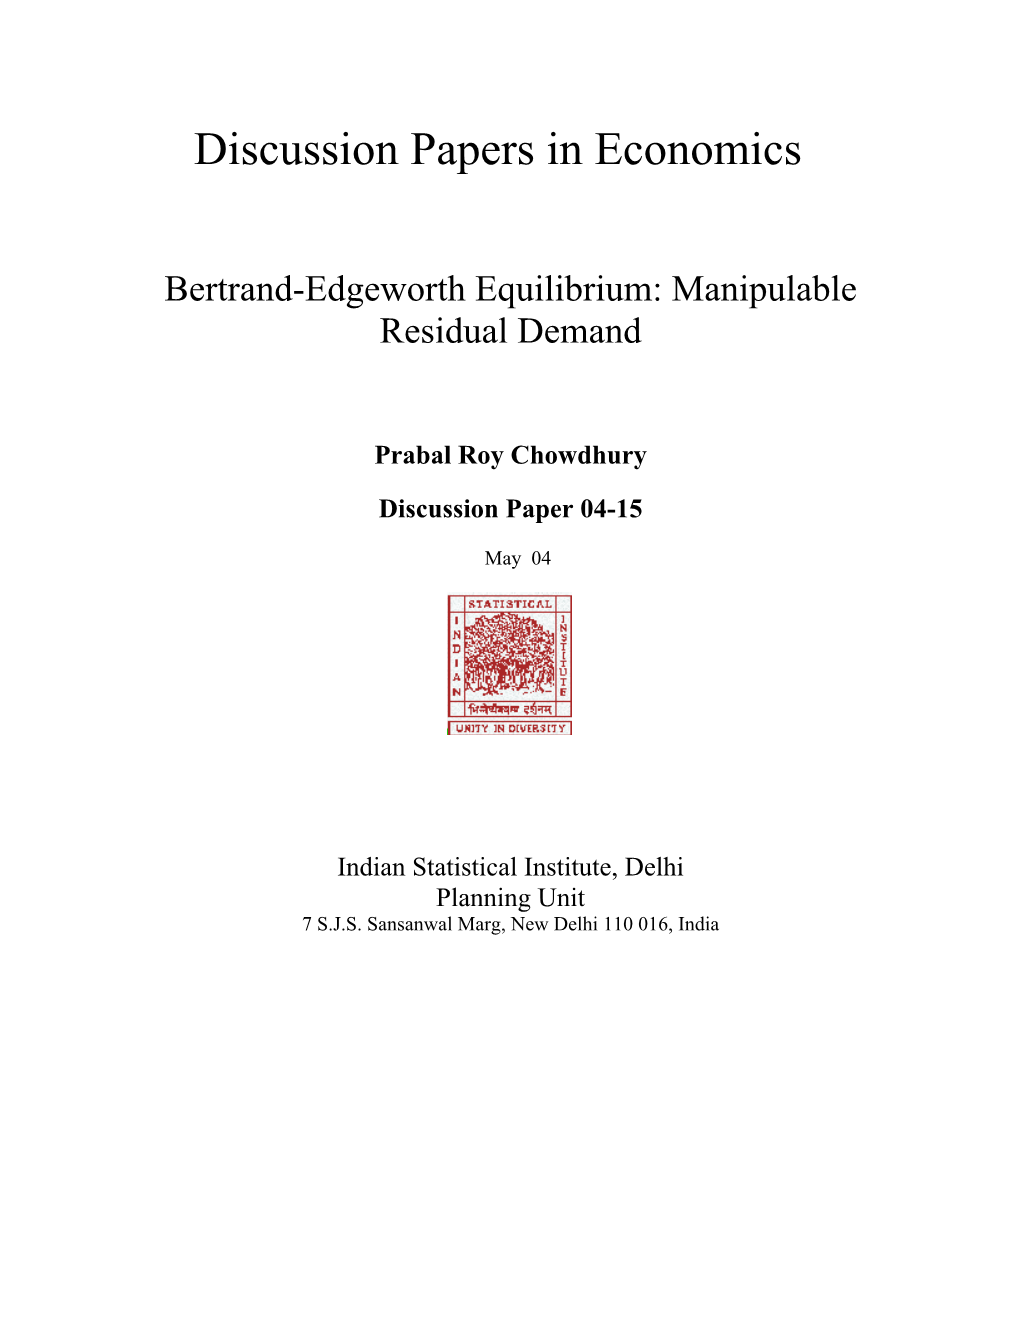 Bertrand-Edgeworth Equilibrium: Manipulable Residual Demand